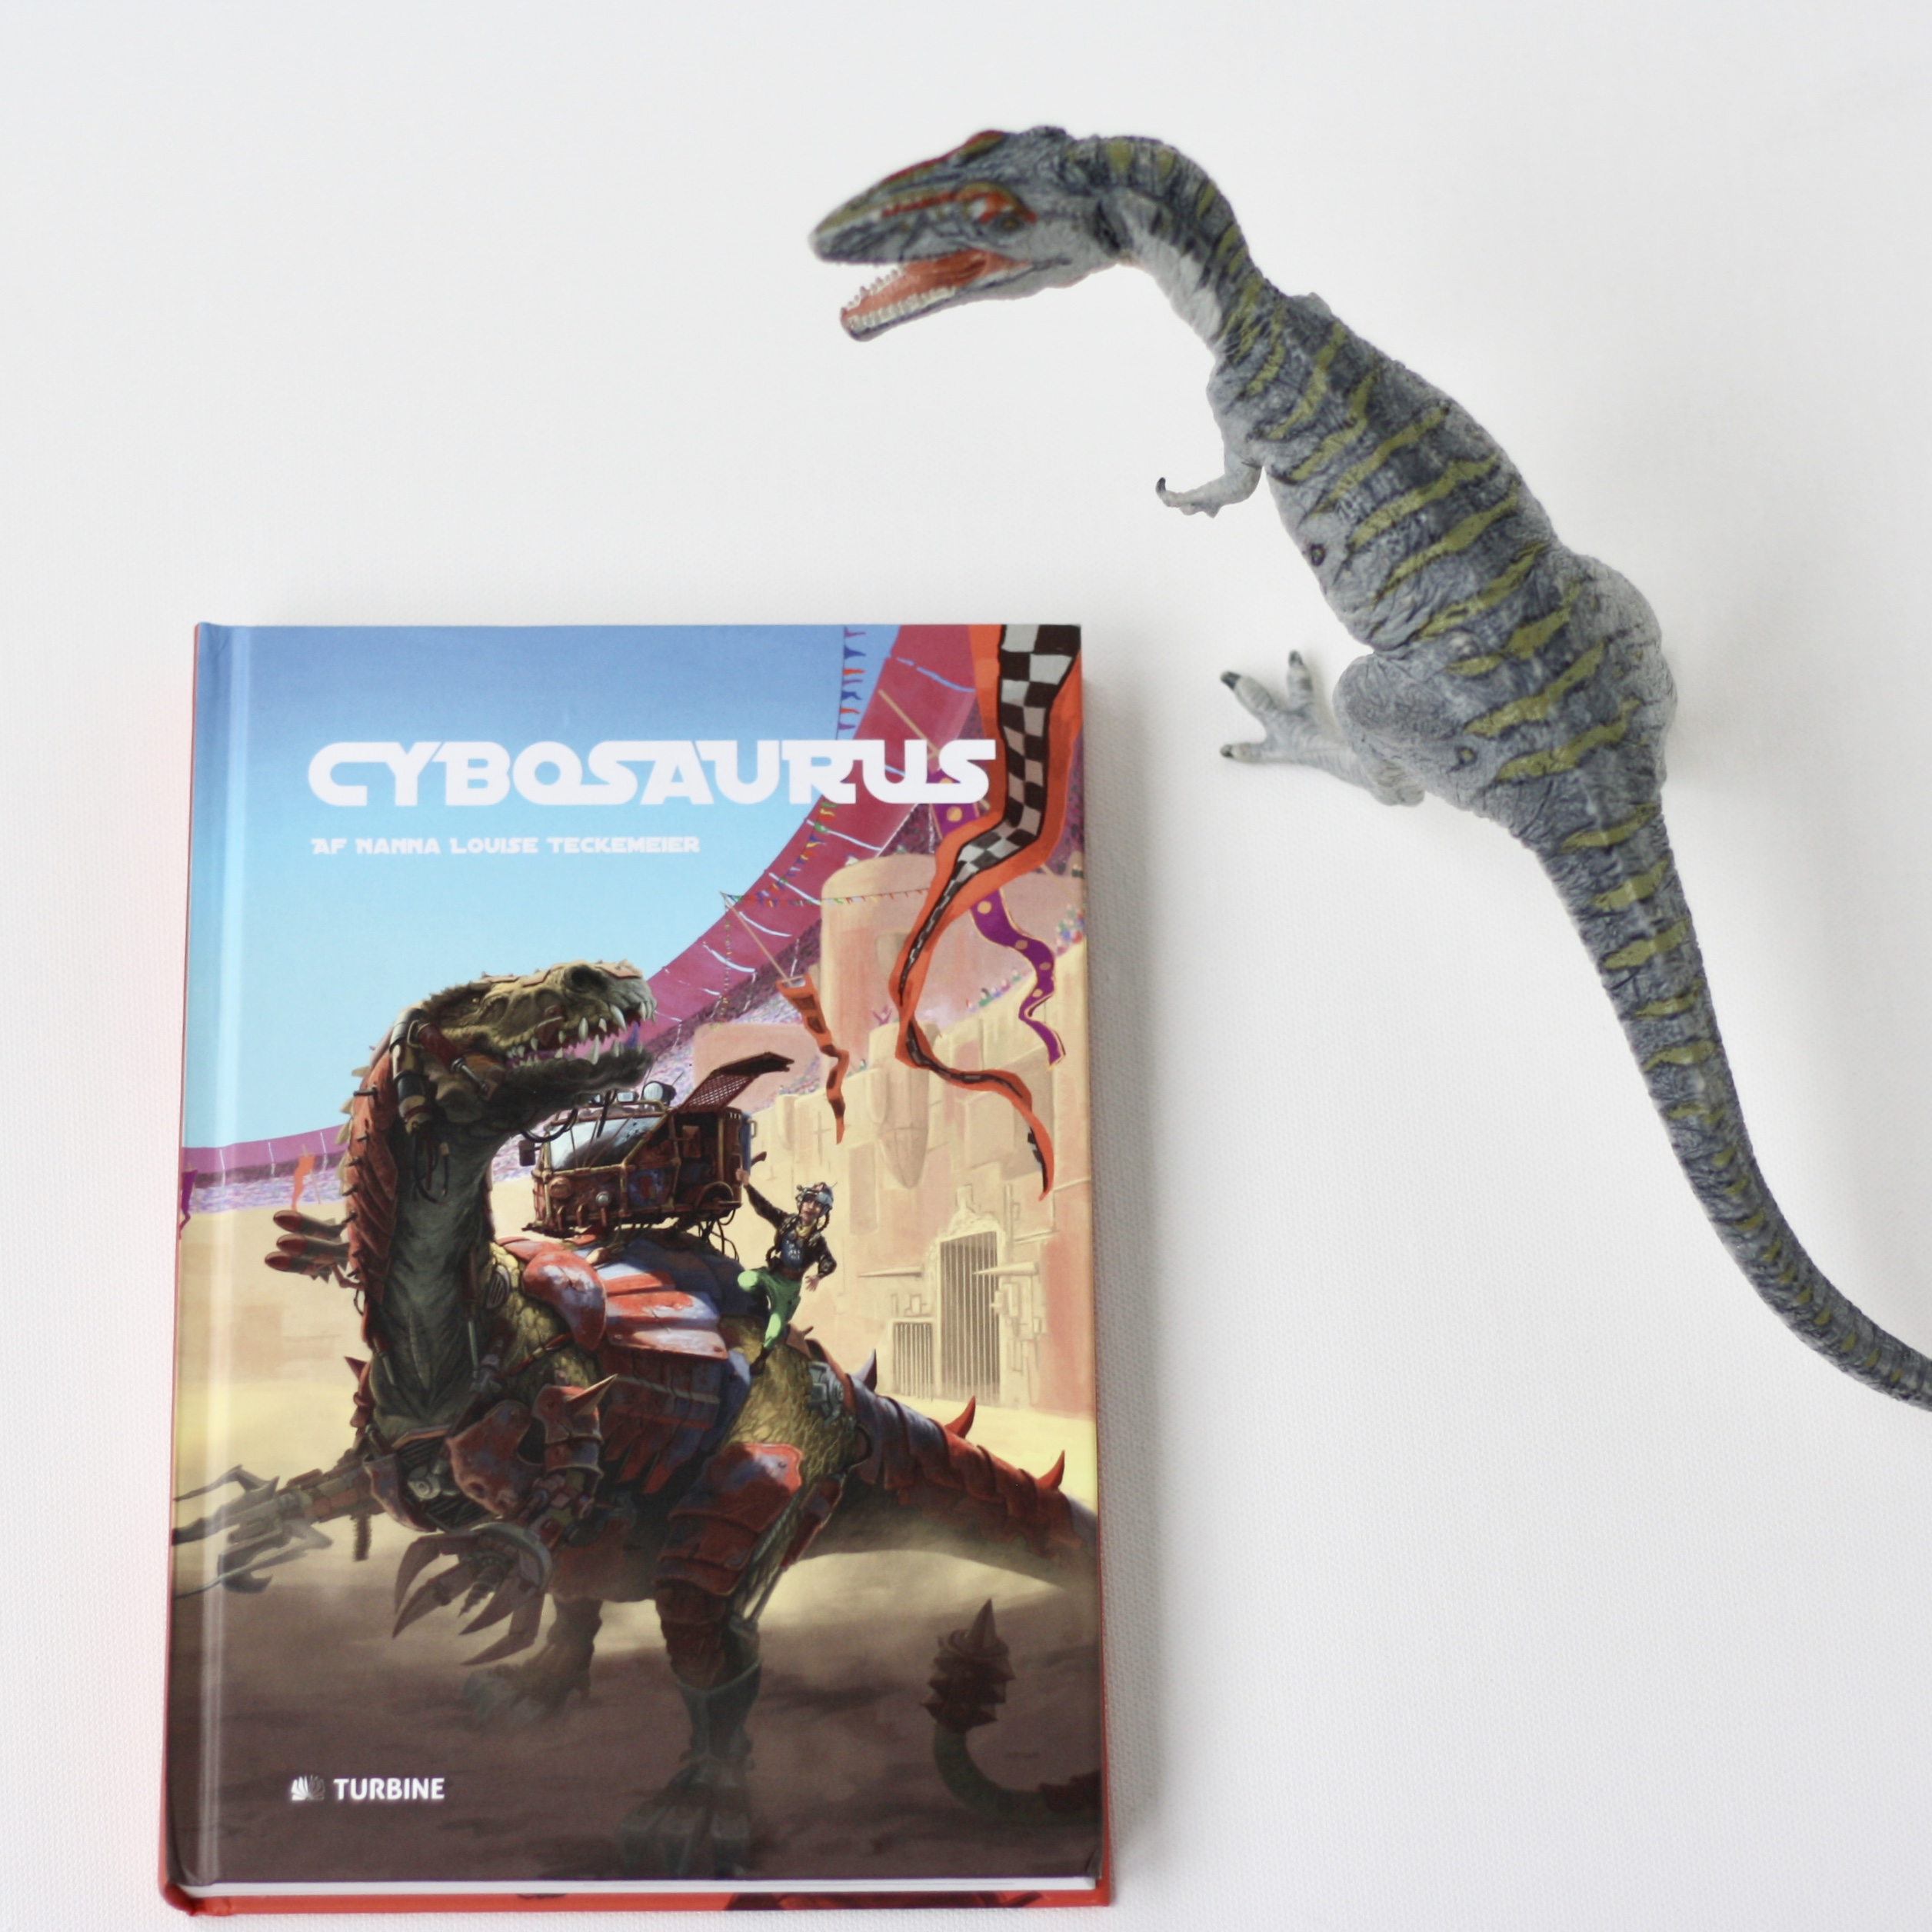 Cybosaurus, Nanna Louise Teckemeier, Bogoplevelsen